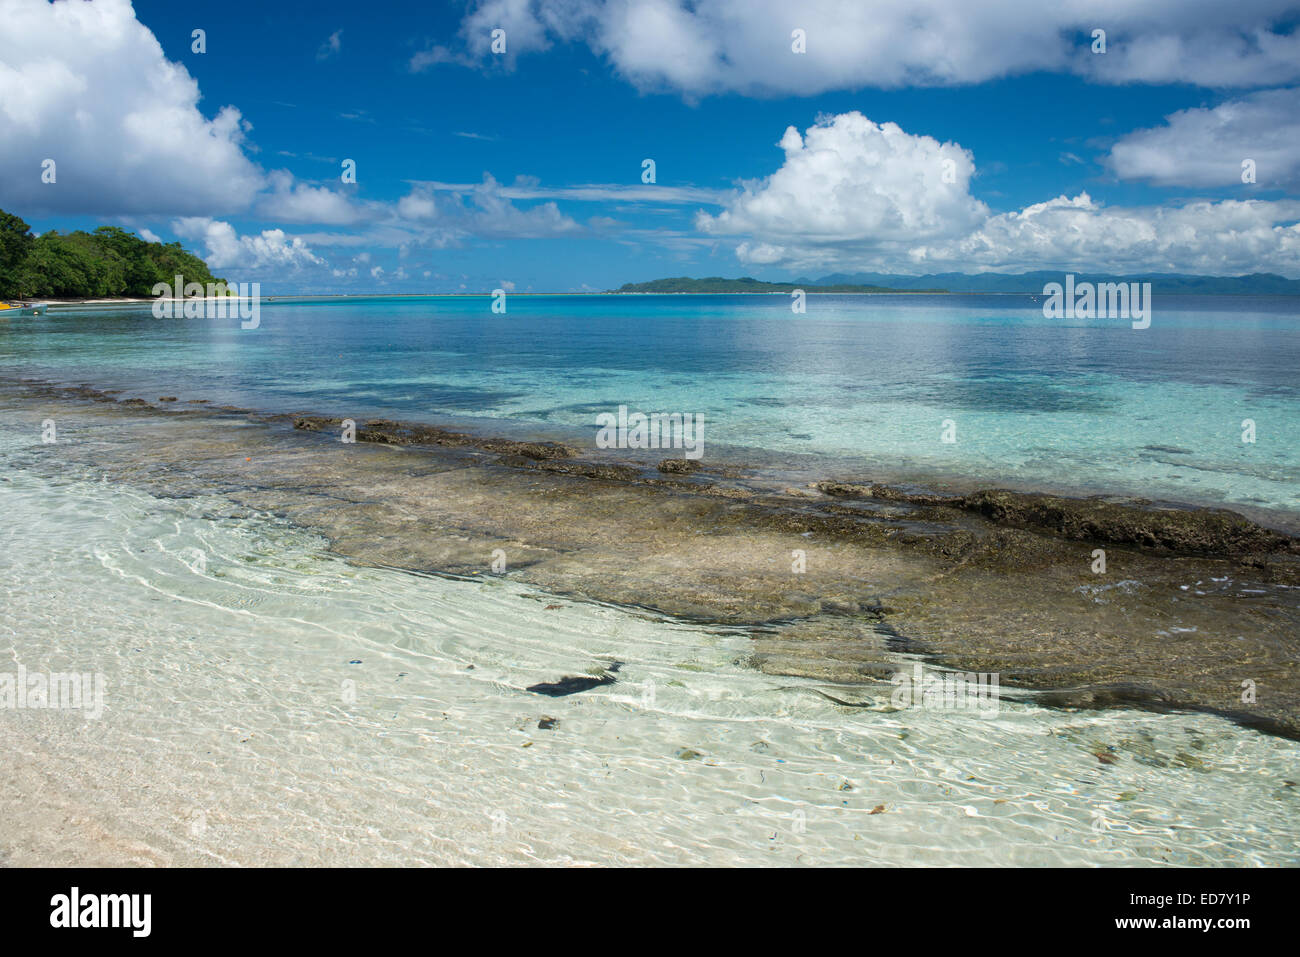 La Melanesia, Makira-Ulawa Provincia, Isole Salomone, isola di Owaraha o Owa Raha (precedentemente noto come Santa Ana). Foto Stock